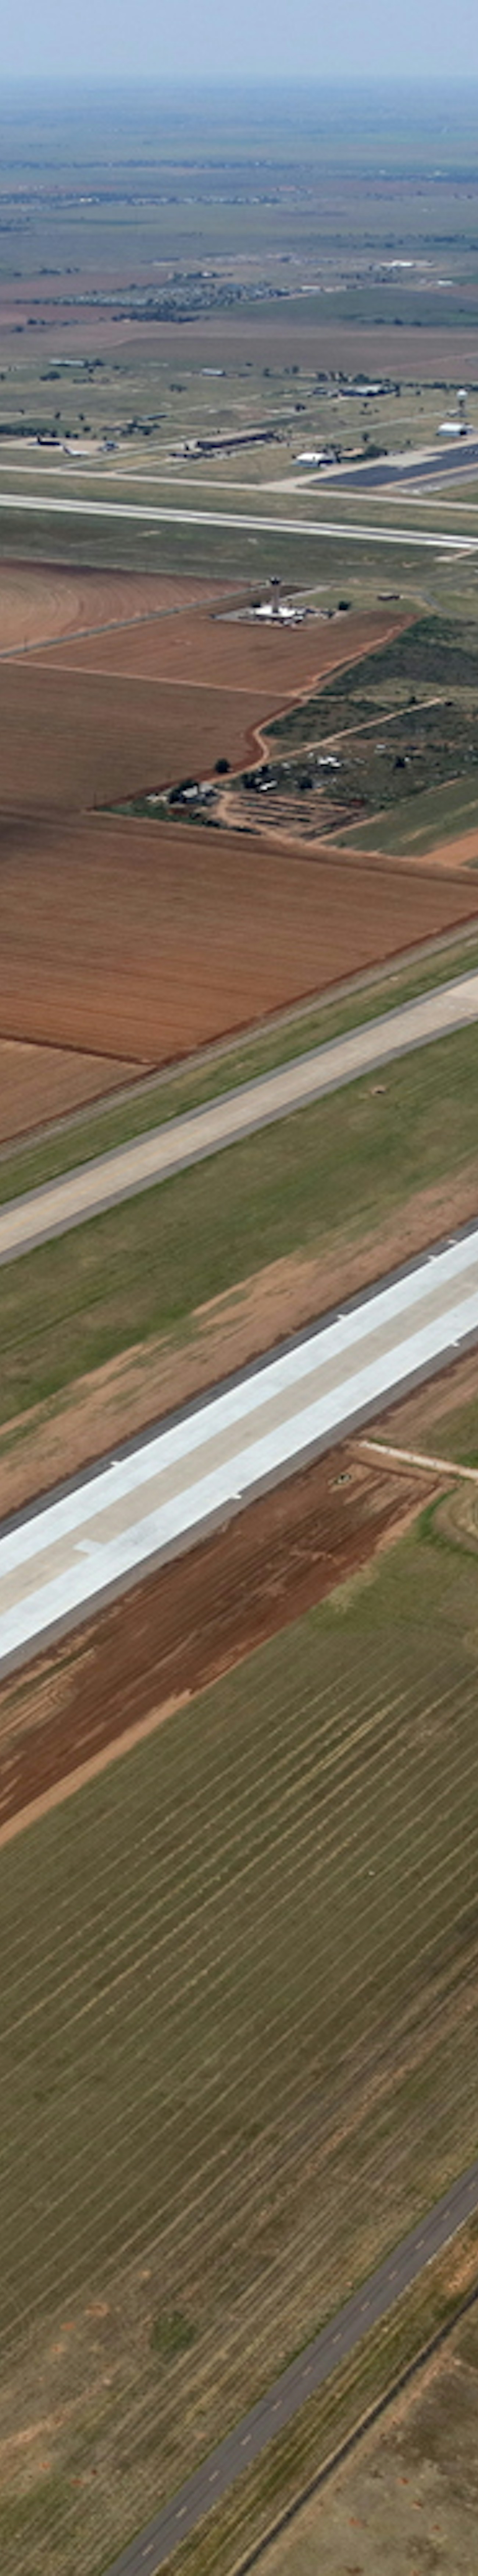                         LBB Preston Smith International Airport Runway 17R-35L
                    